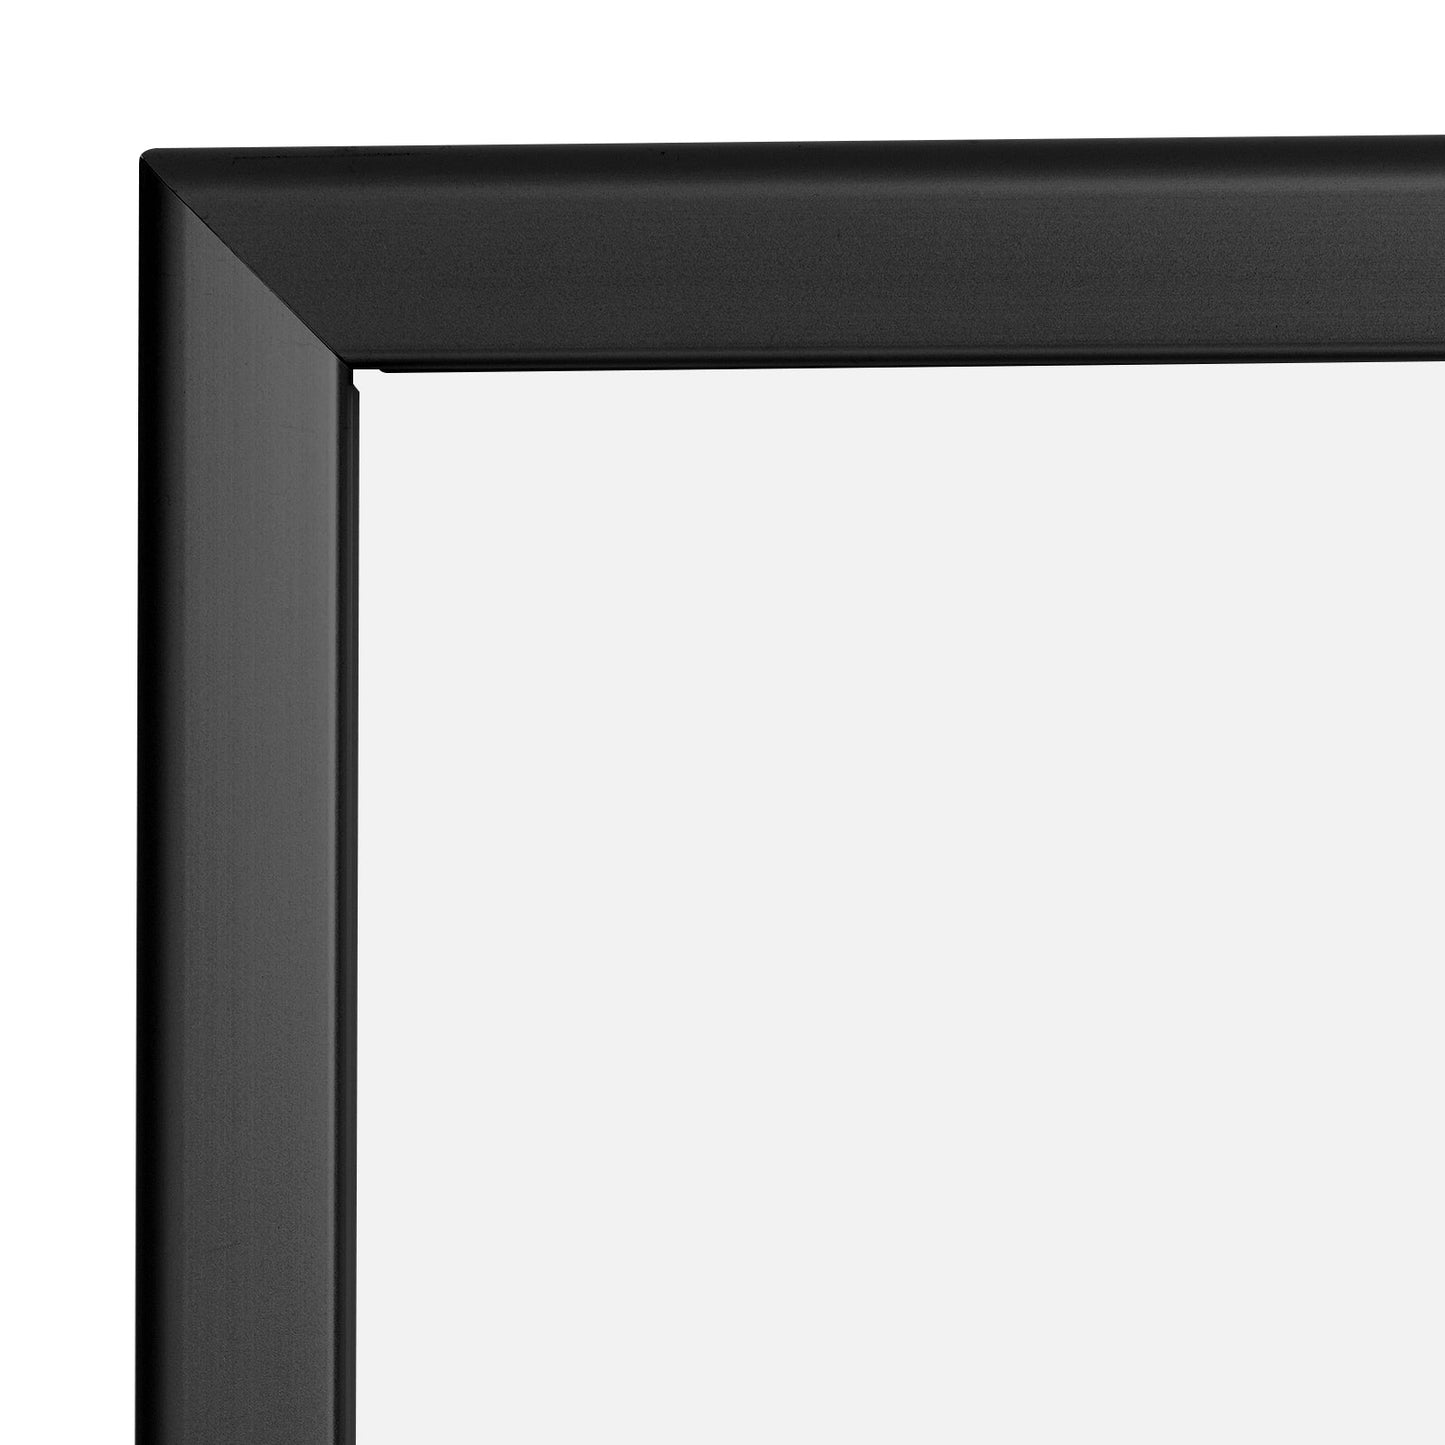 36x36 Black SnapeZo® Snap Frame - 1.25" Profile